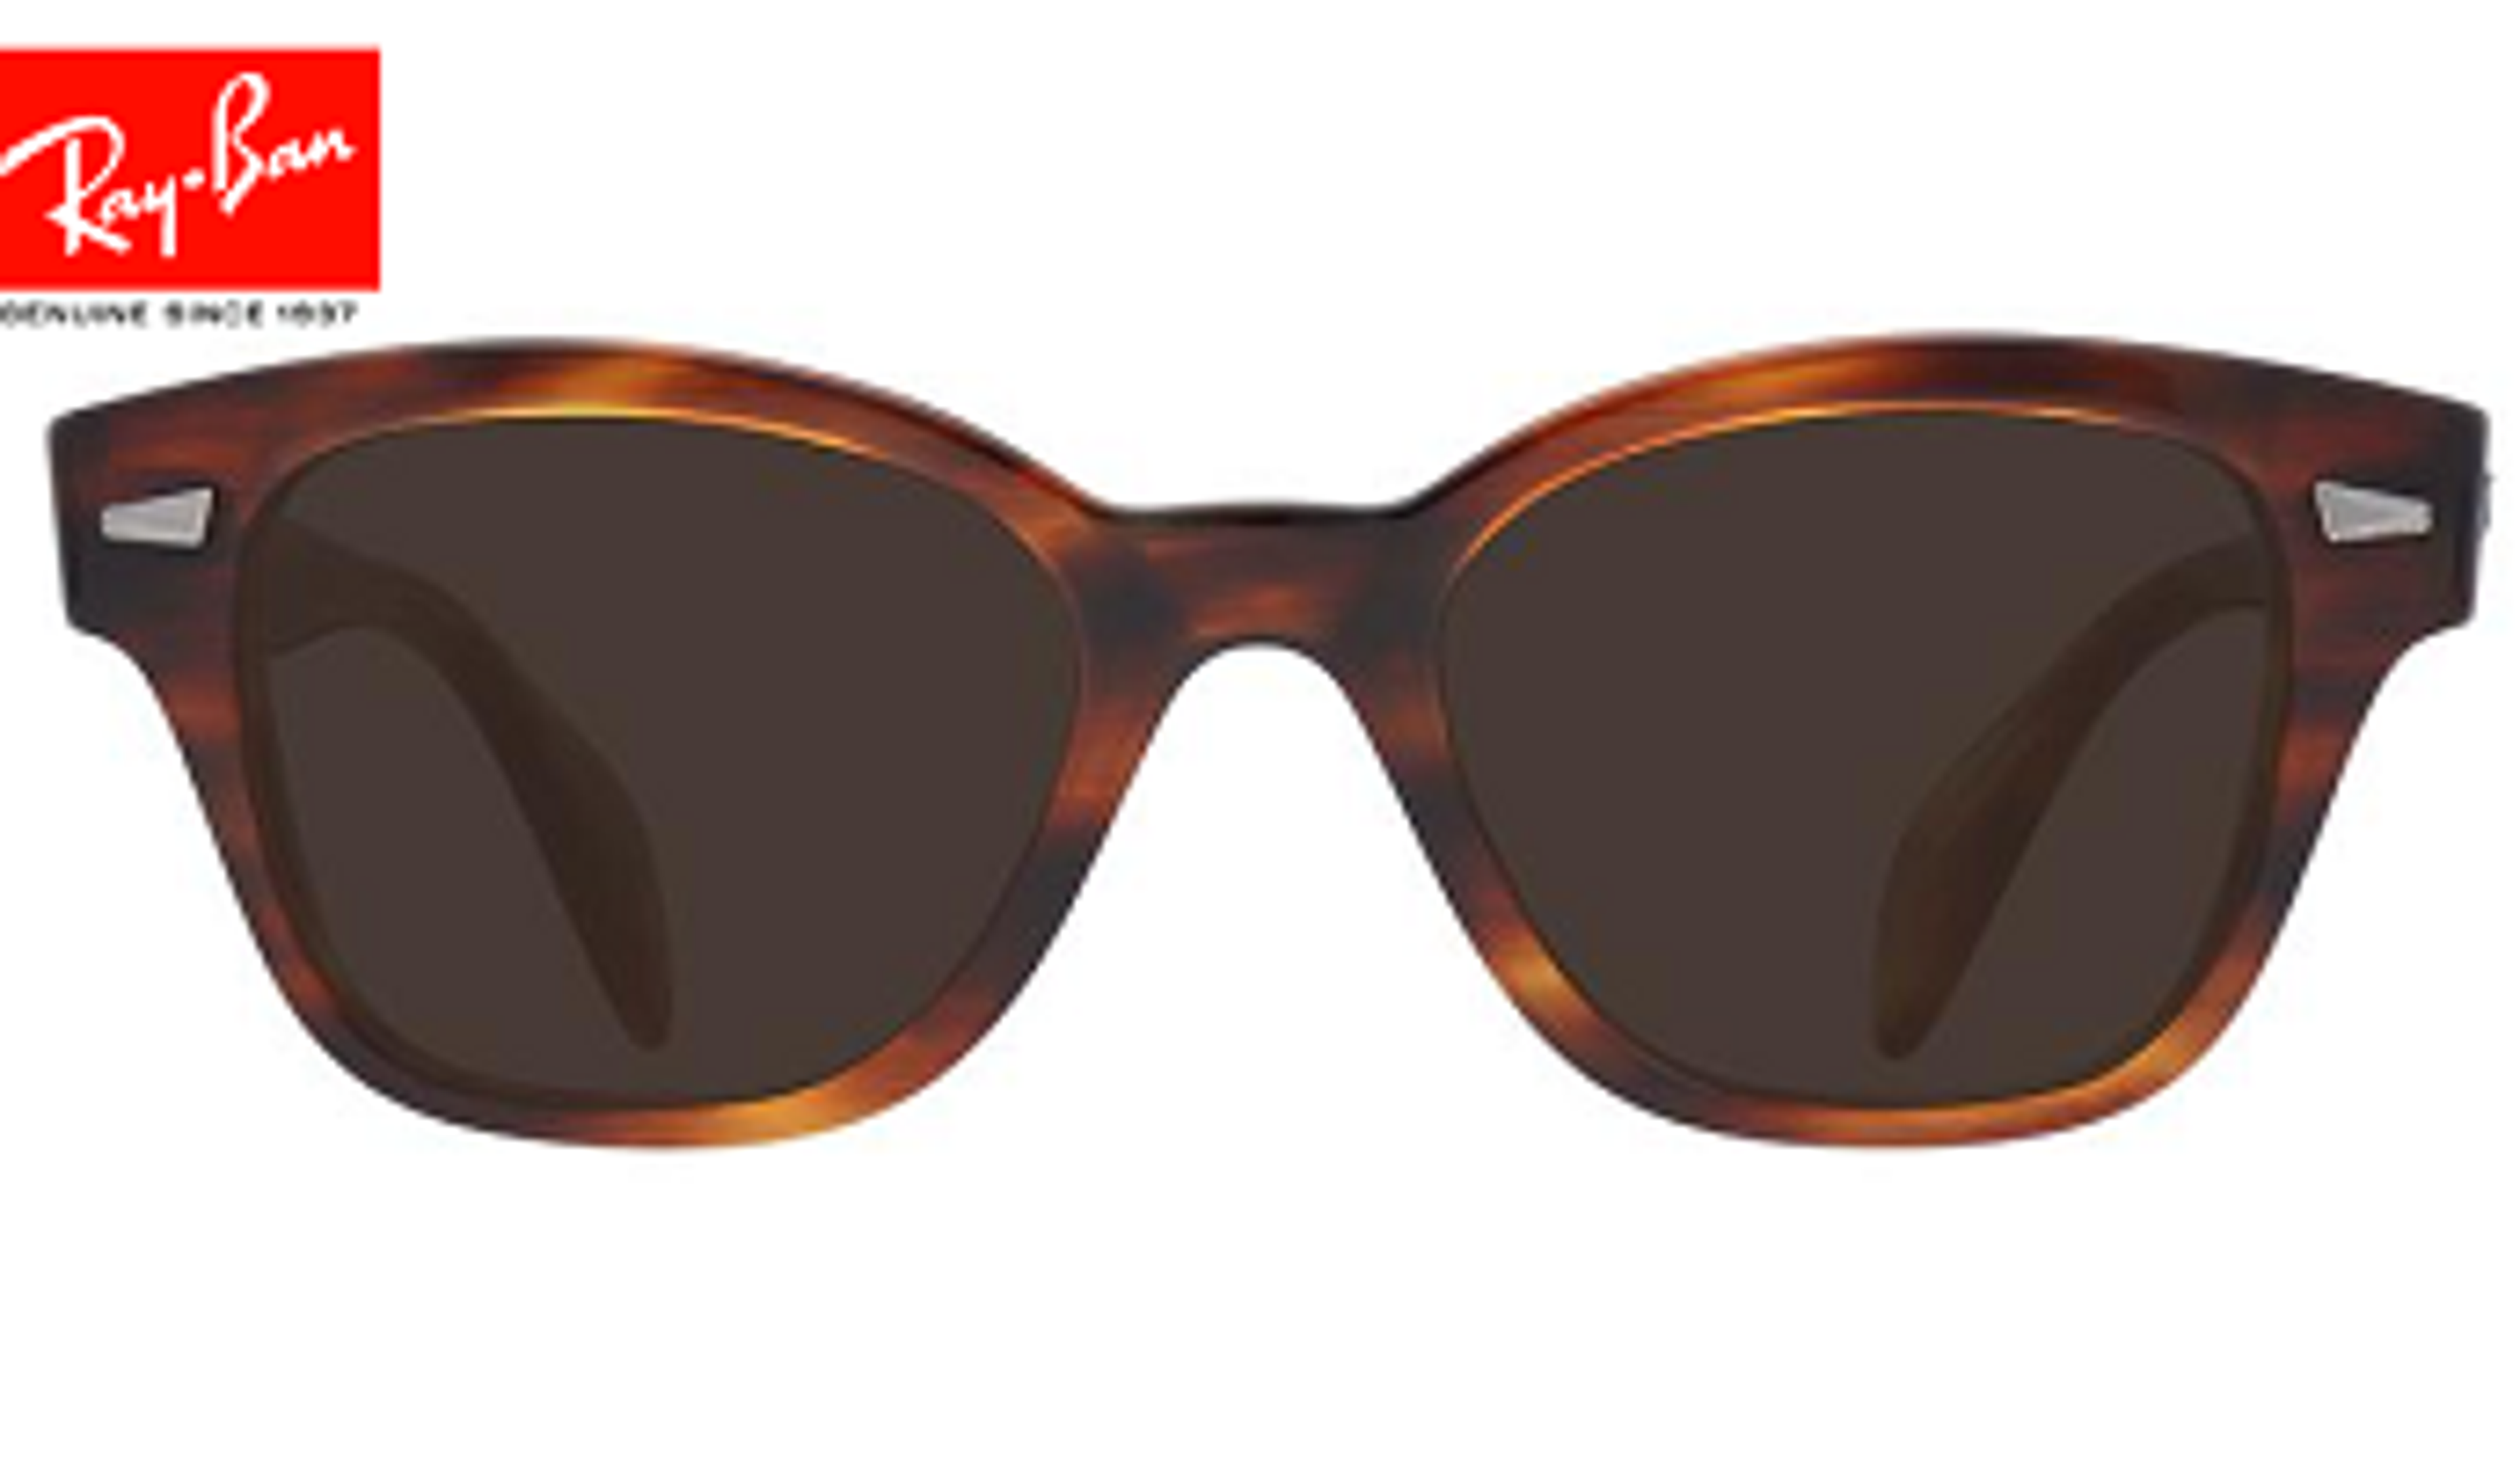  Rayban Tortoiseshell Square Framed Women's Sunglasses 